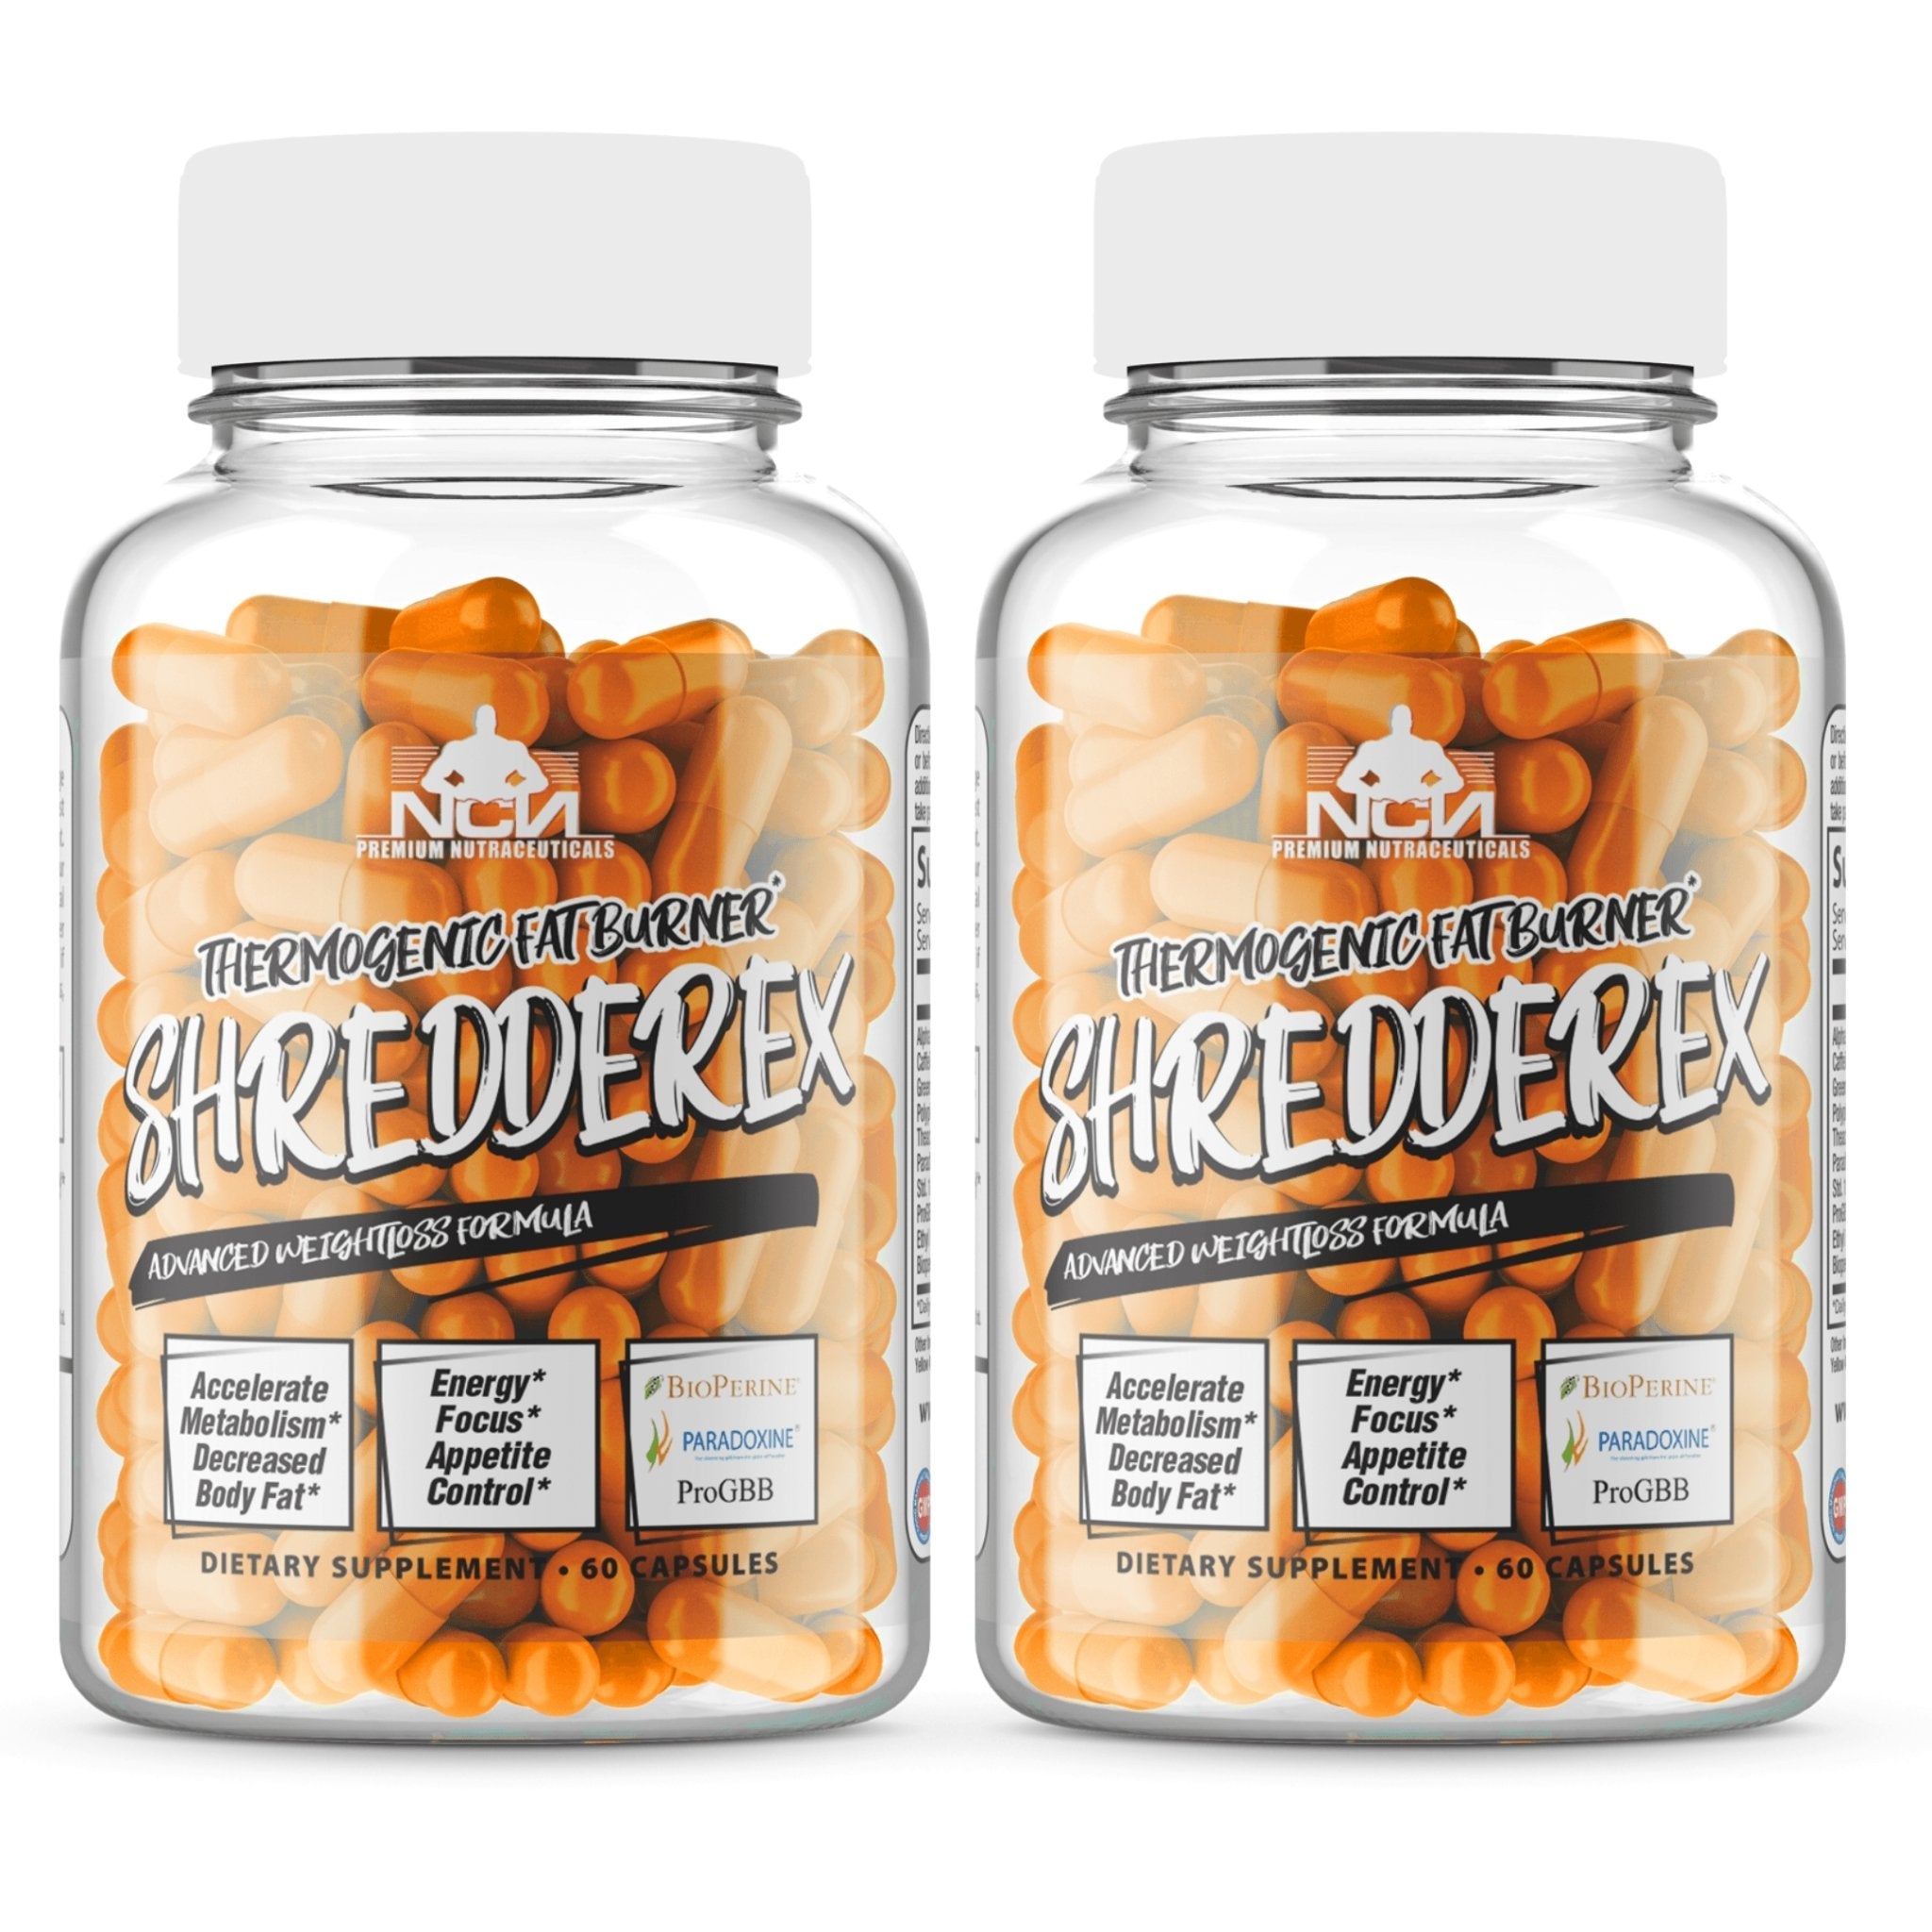 Shredderex Supplements Pack 